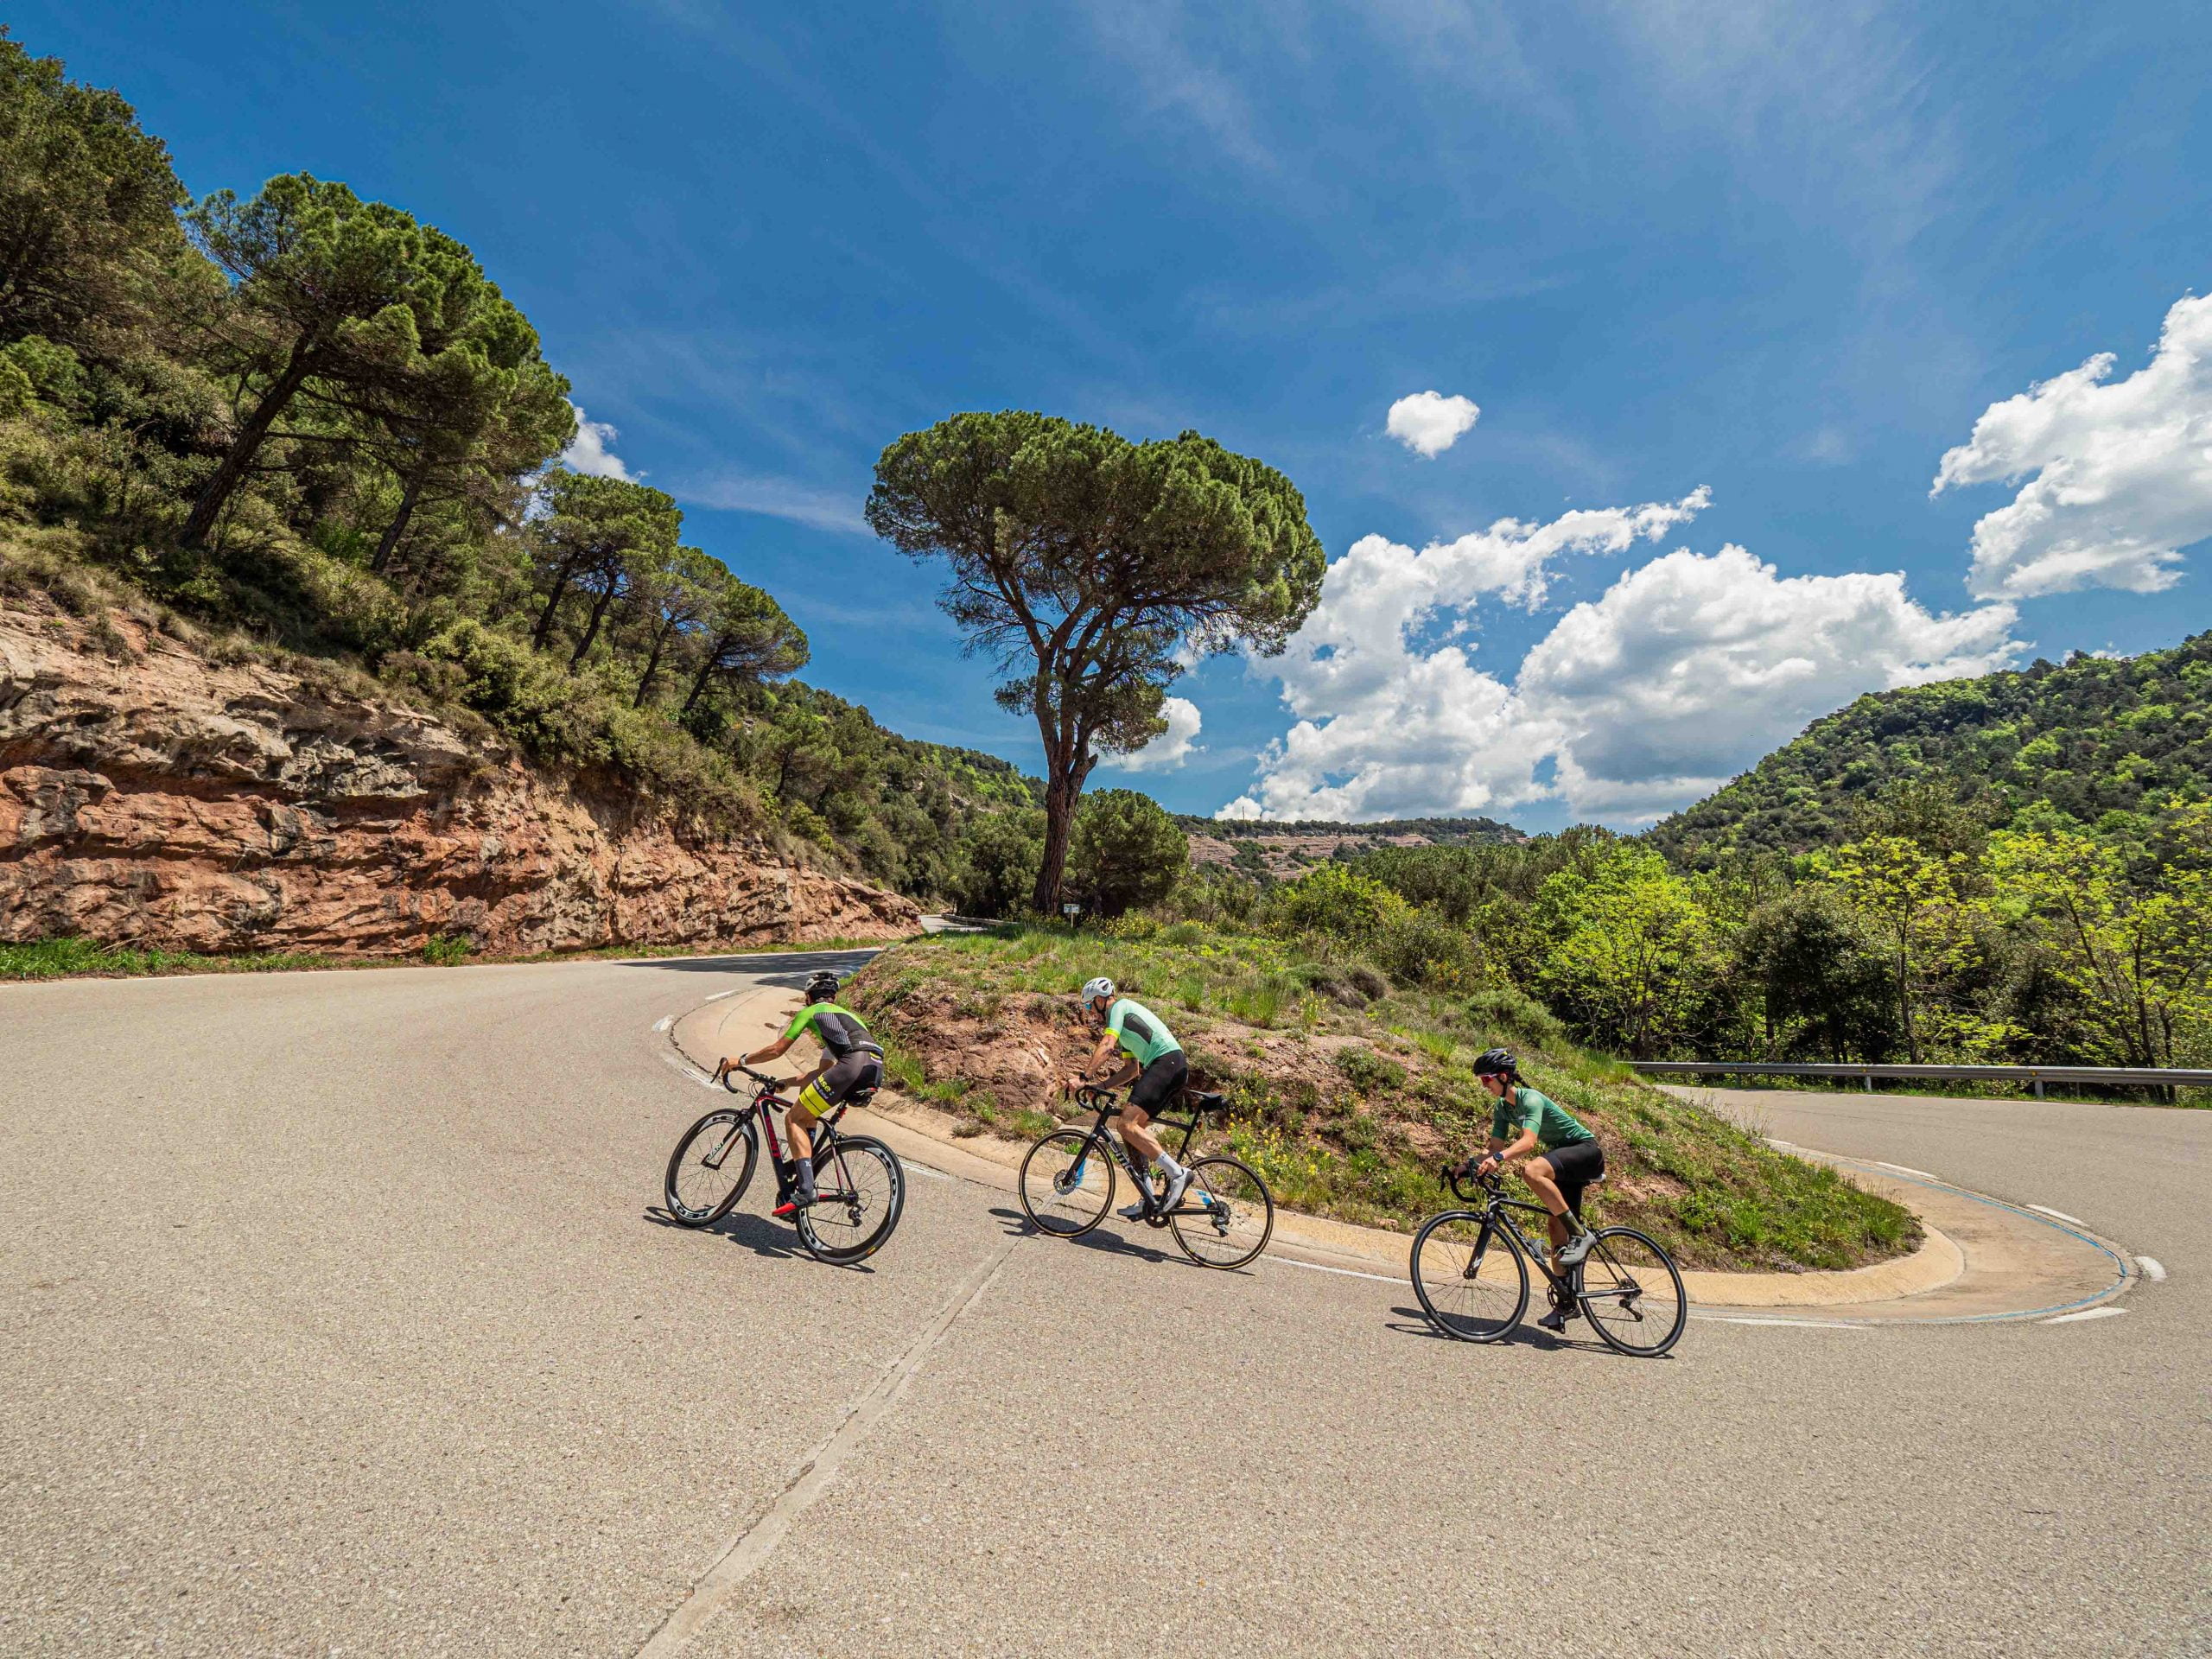 Cycling in the Osona region near Barcelona, Spain